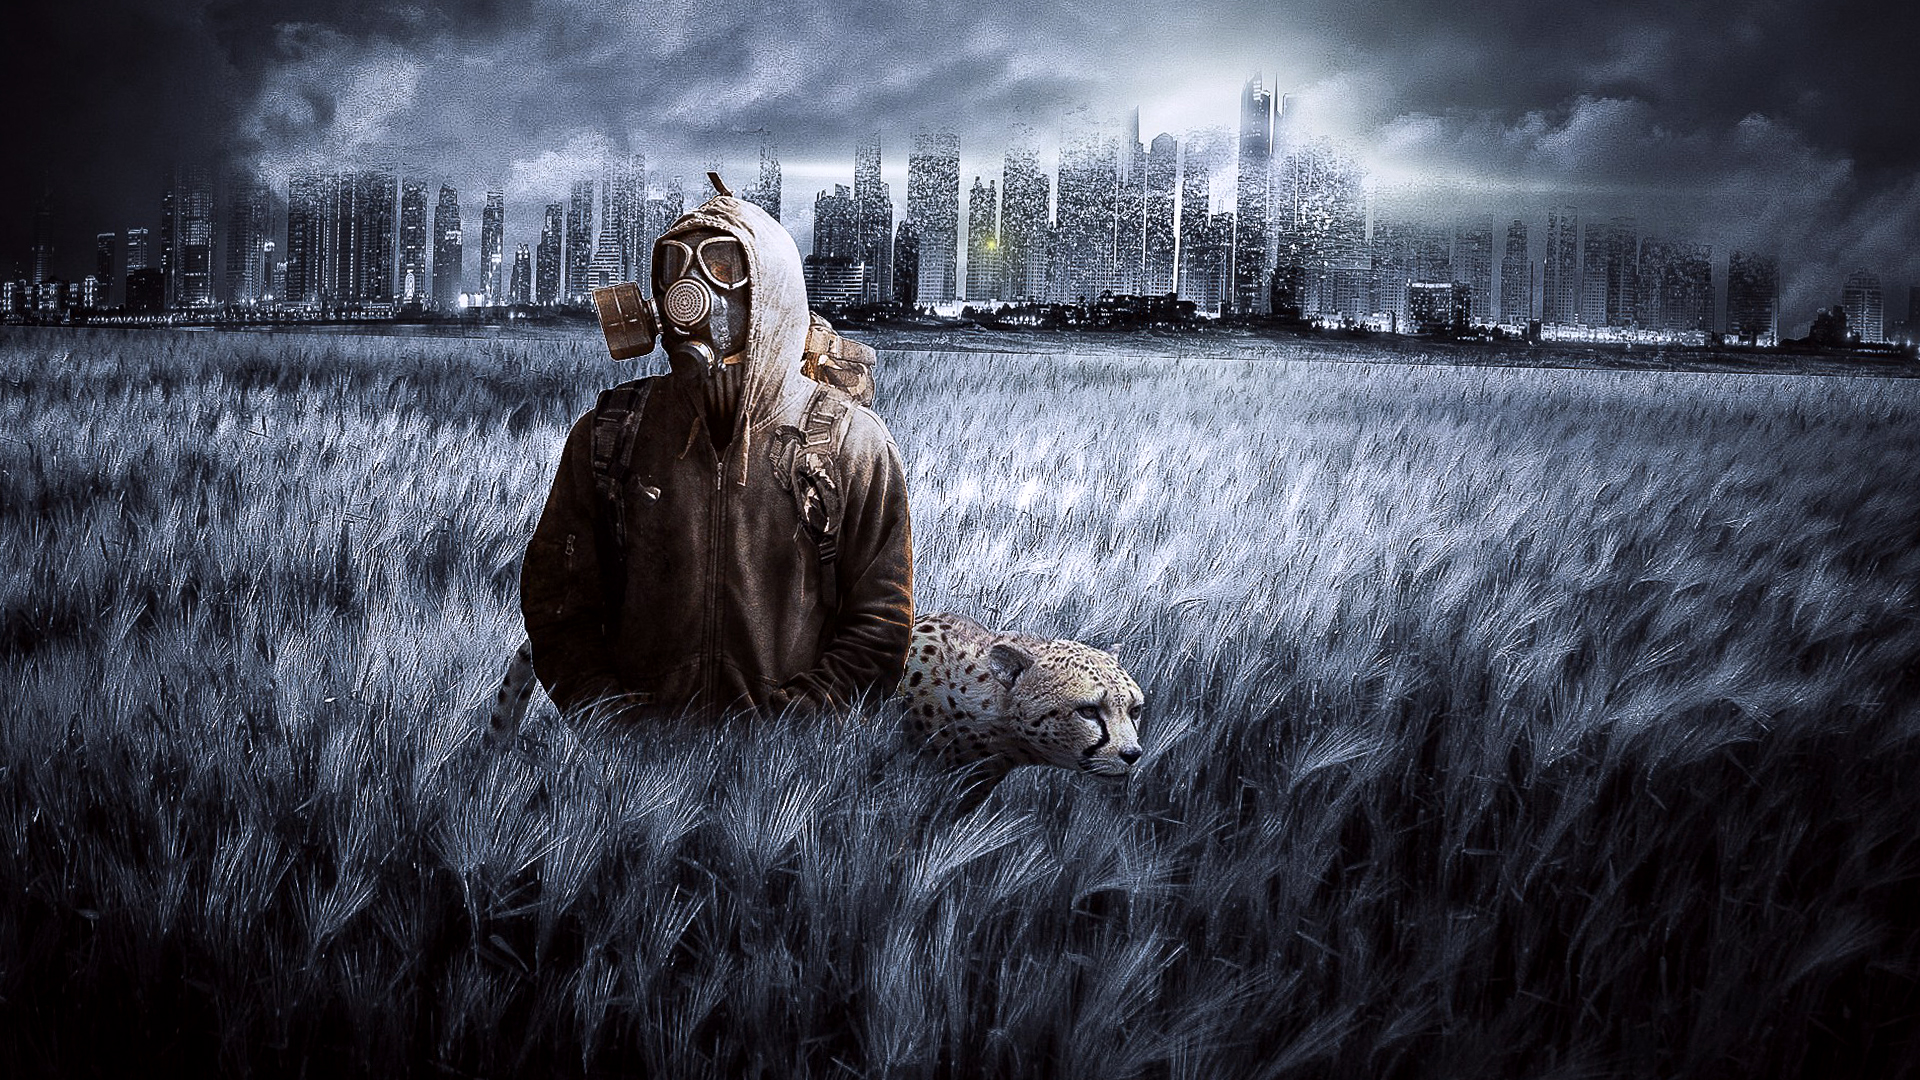 Gas Mask And Cheetah Landscape Wallpaper